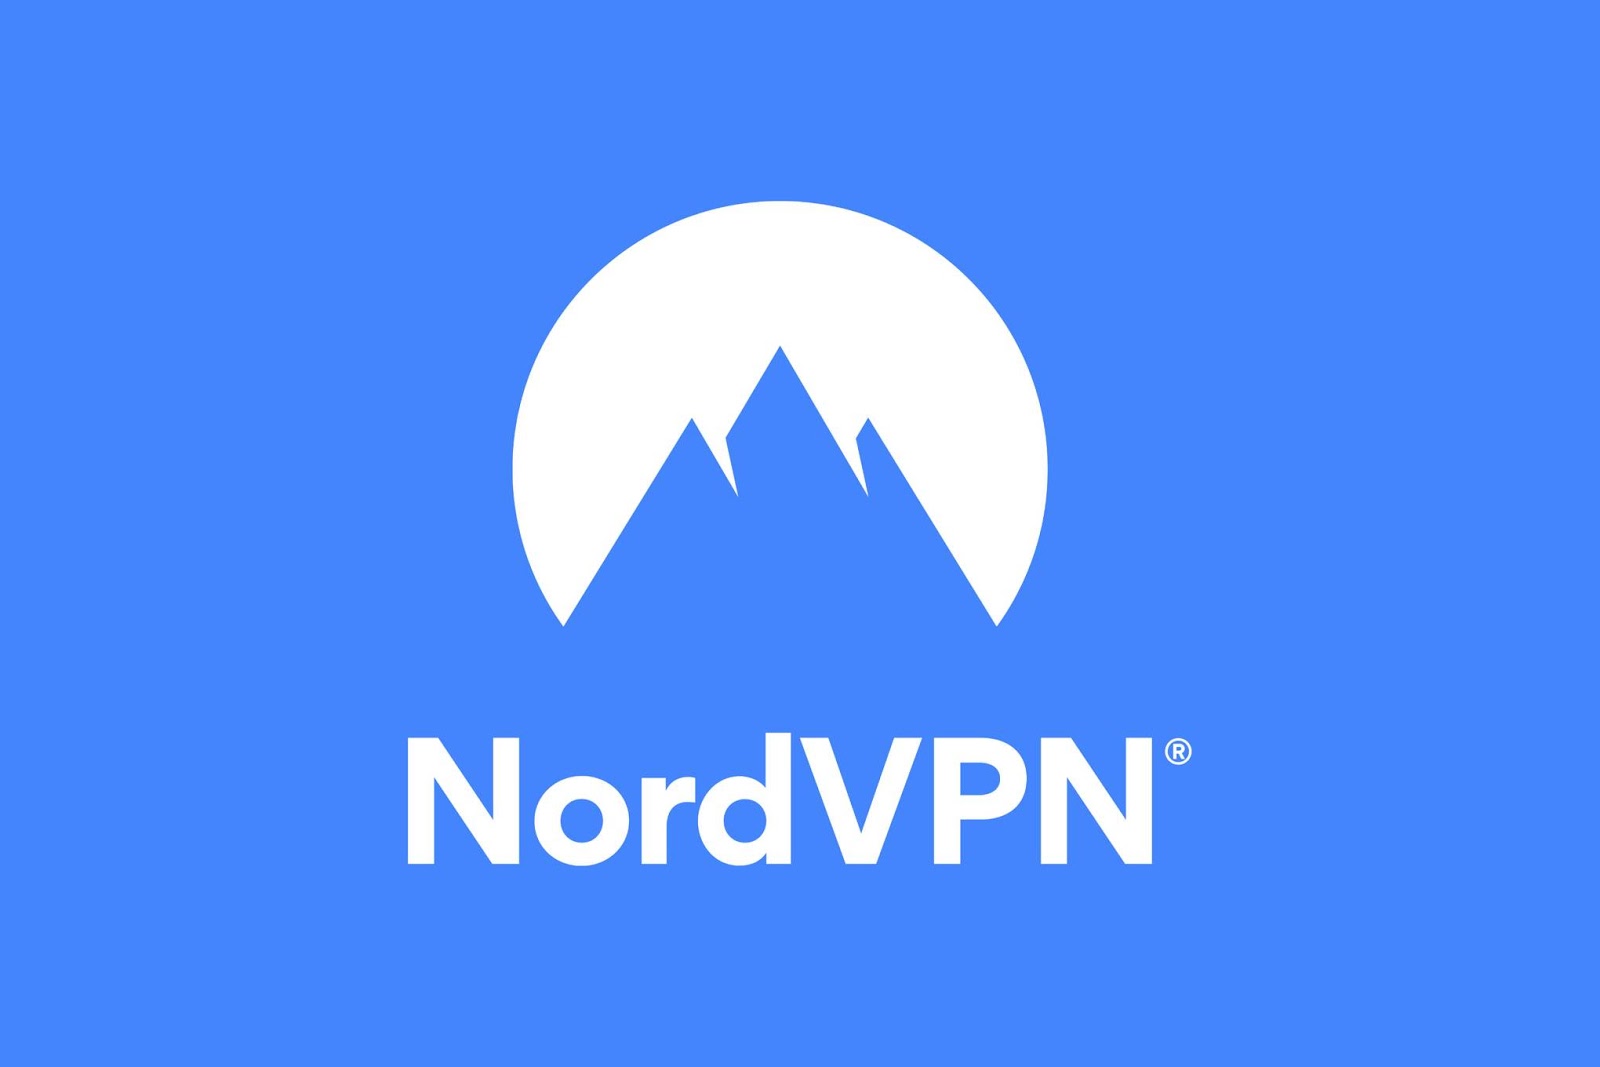 nordvpn review for mac